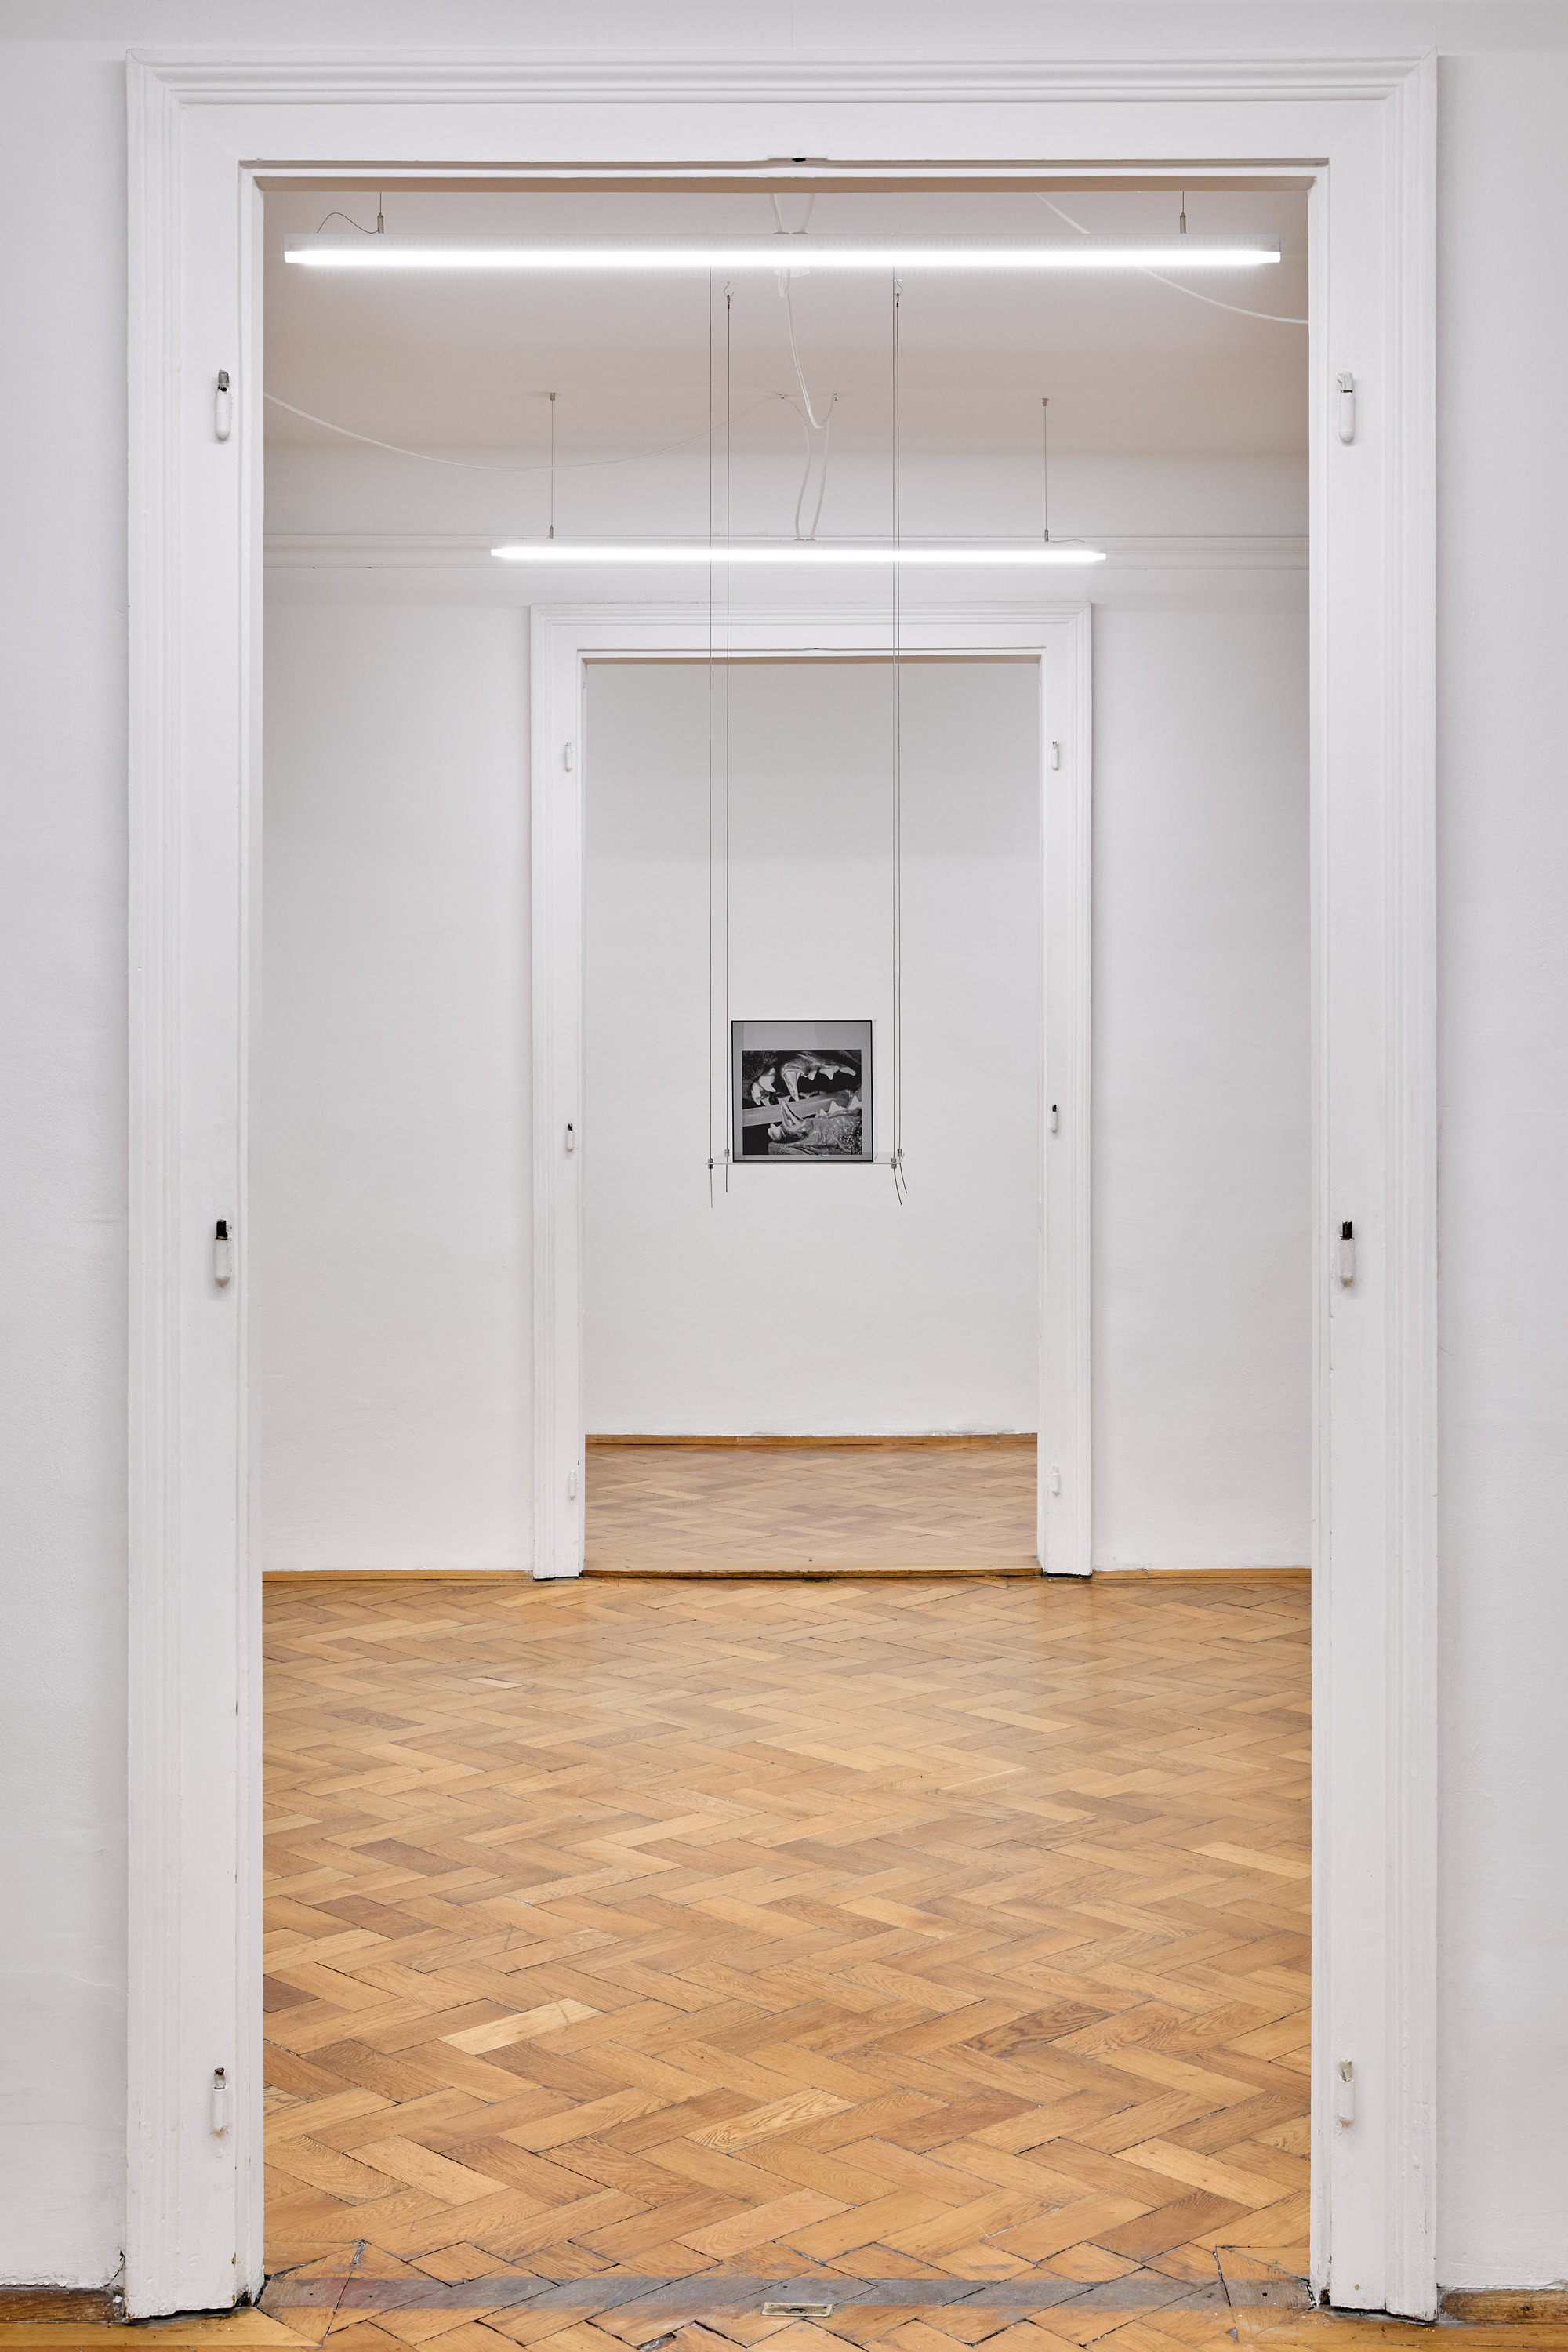 Martin Maeller, Untitled (in my dreams), silkscreen on PMMA, paper, 27 x 27 x 27 cm, 2021/2020 | Photo: Jan Kolsky